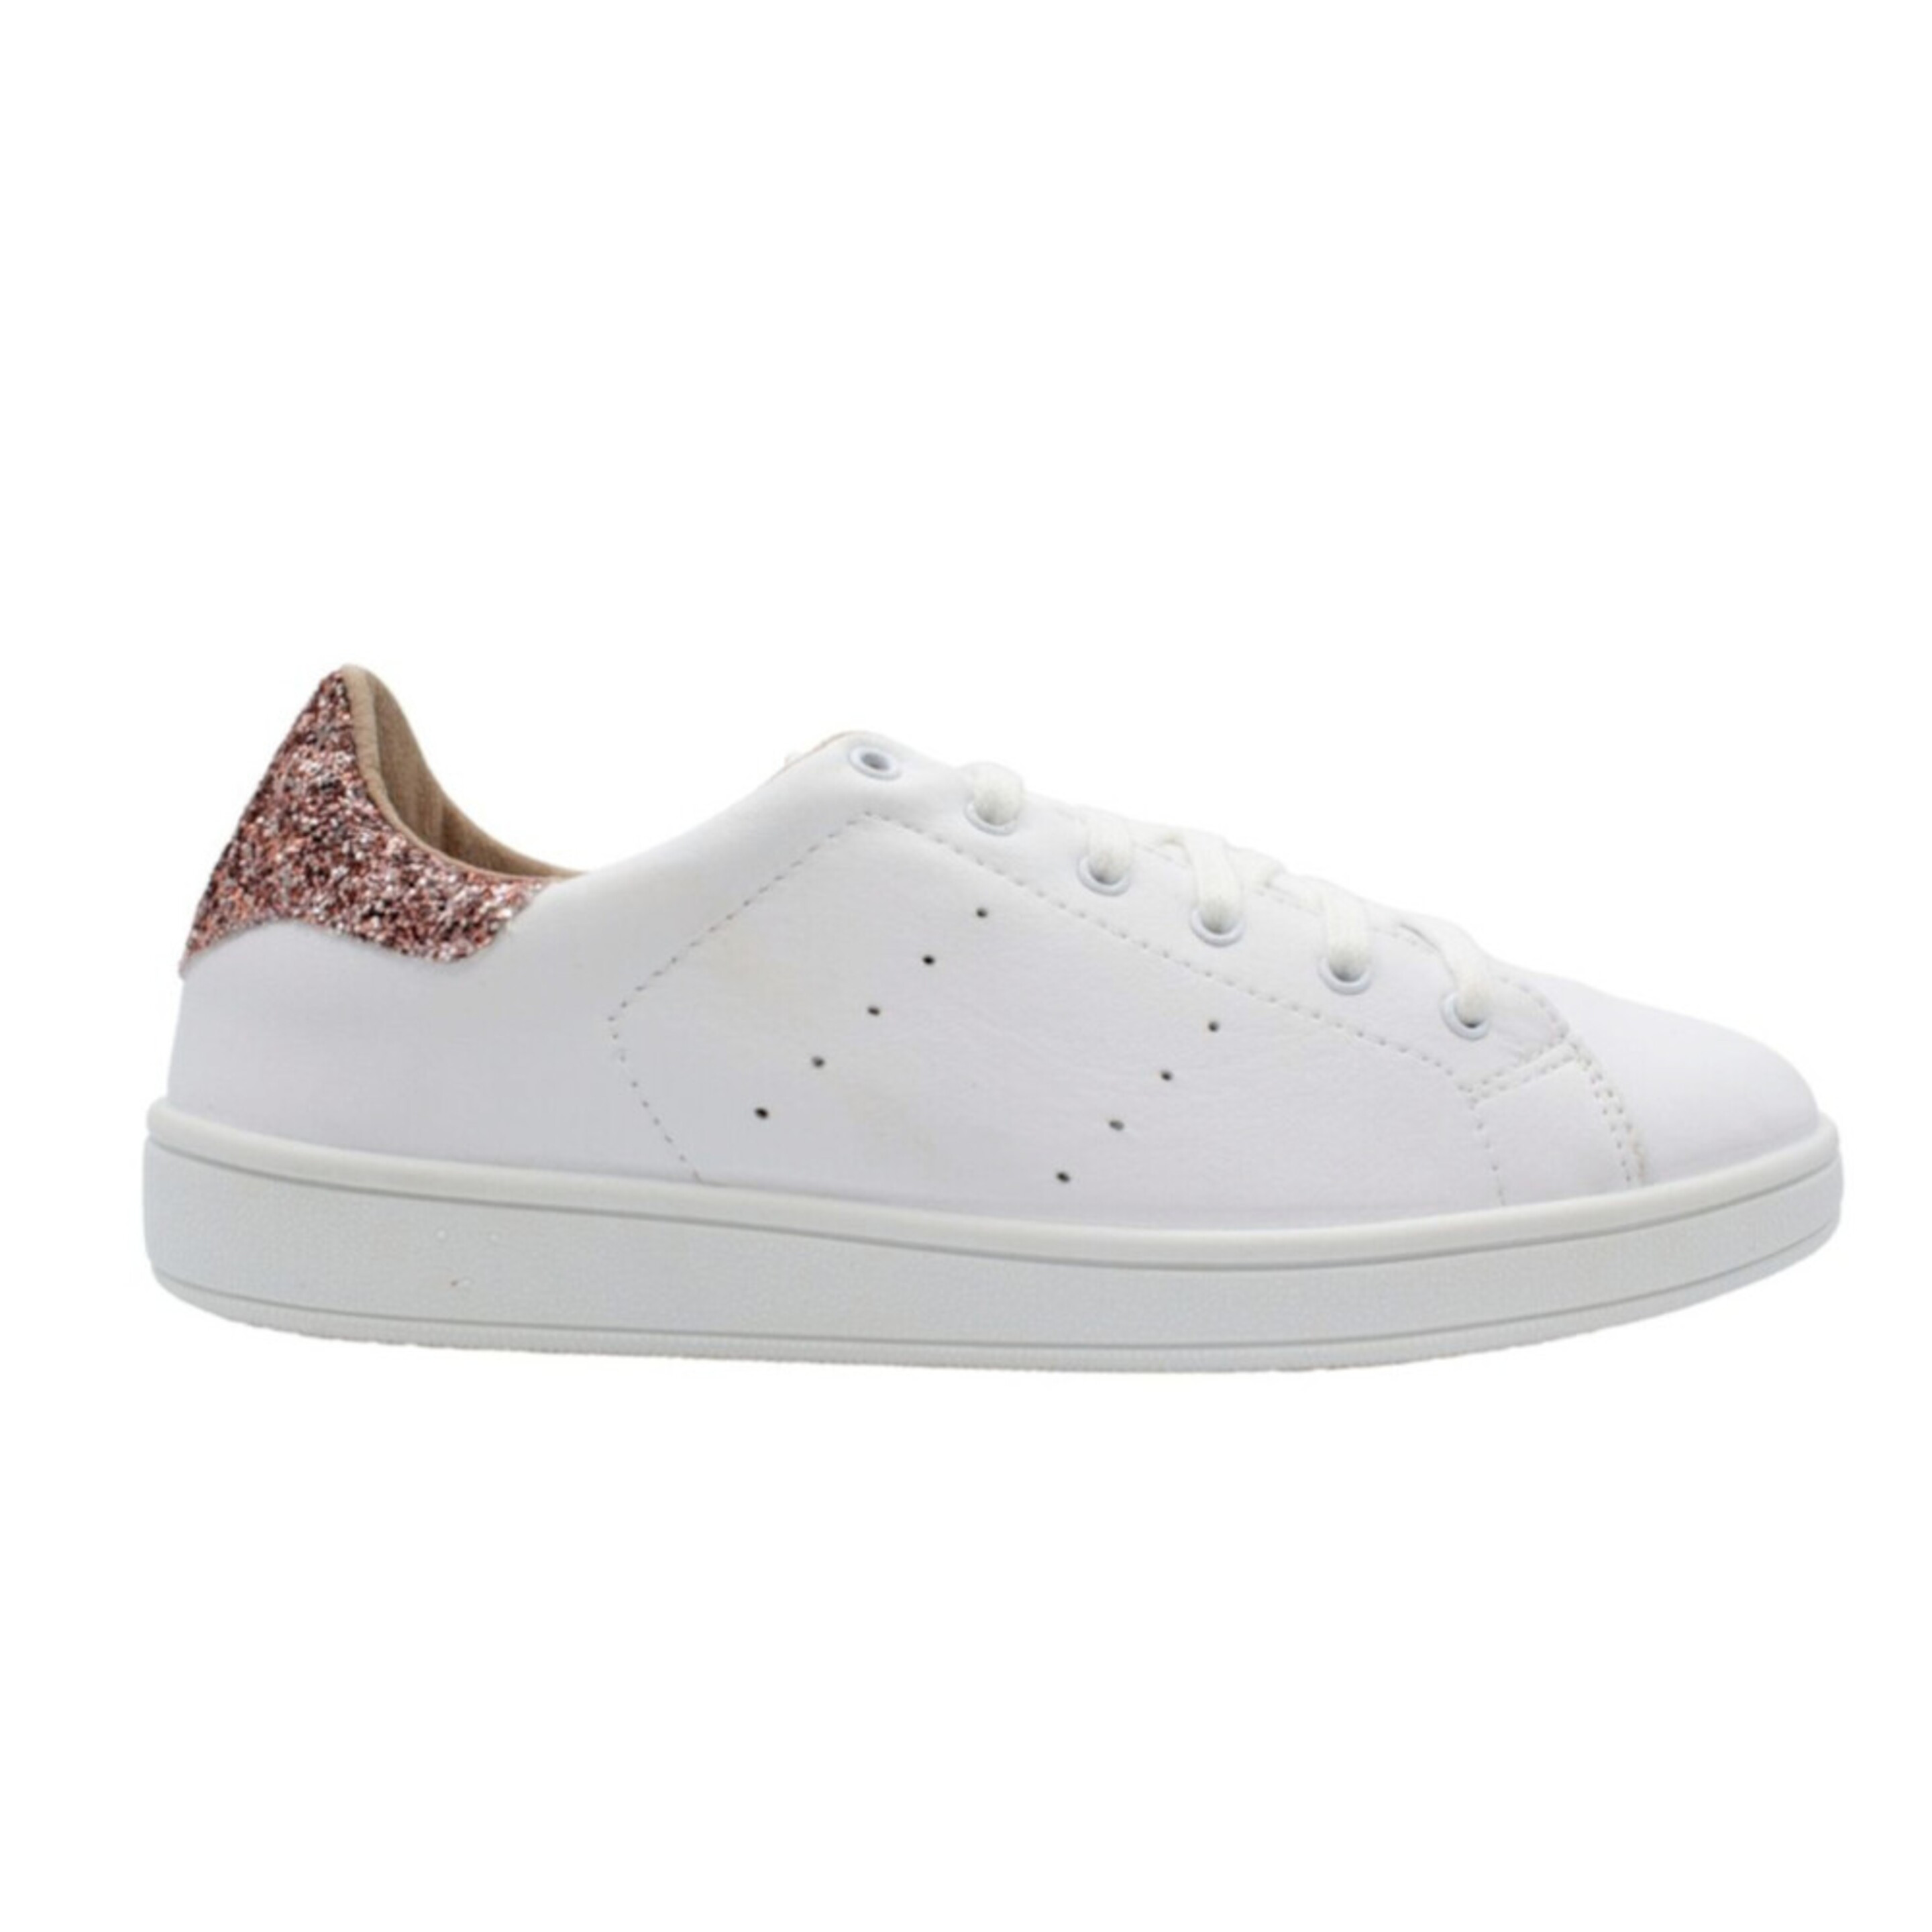 Sneaker Owlet Shoes Ava - blanco-rosa - 